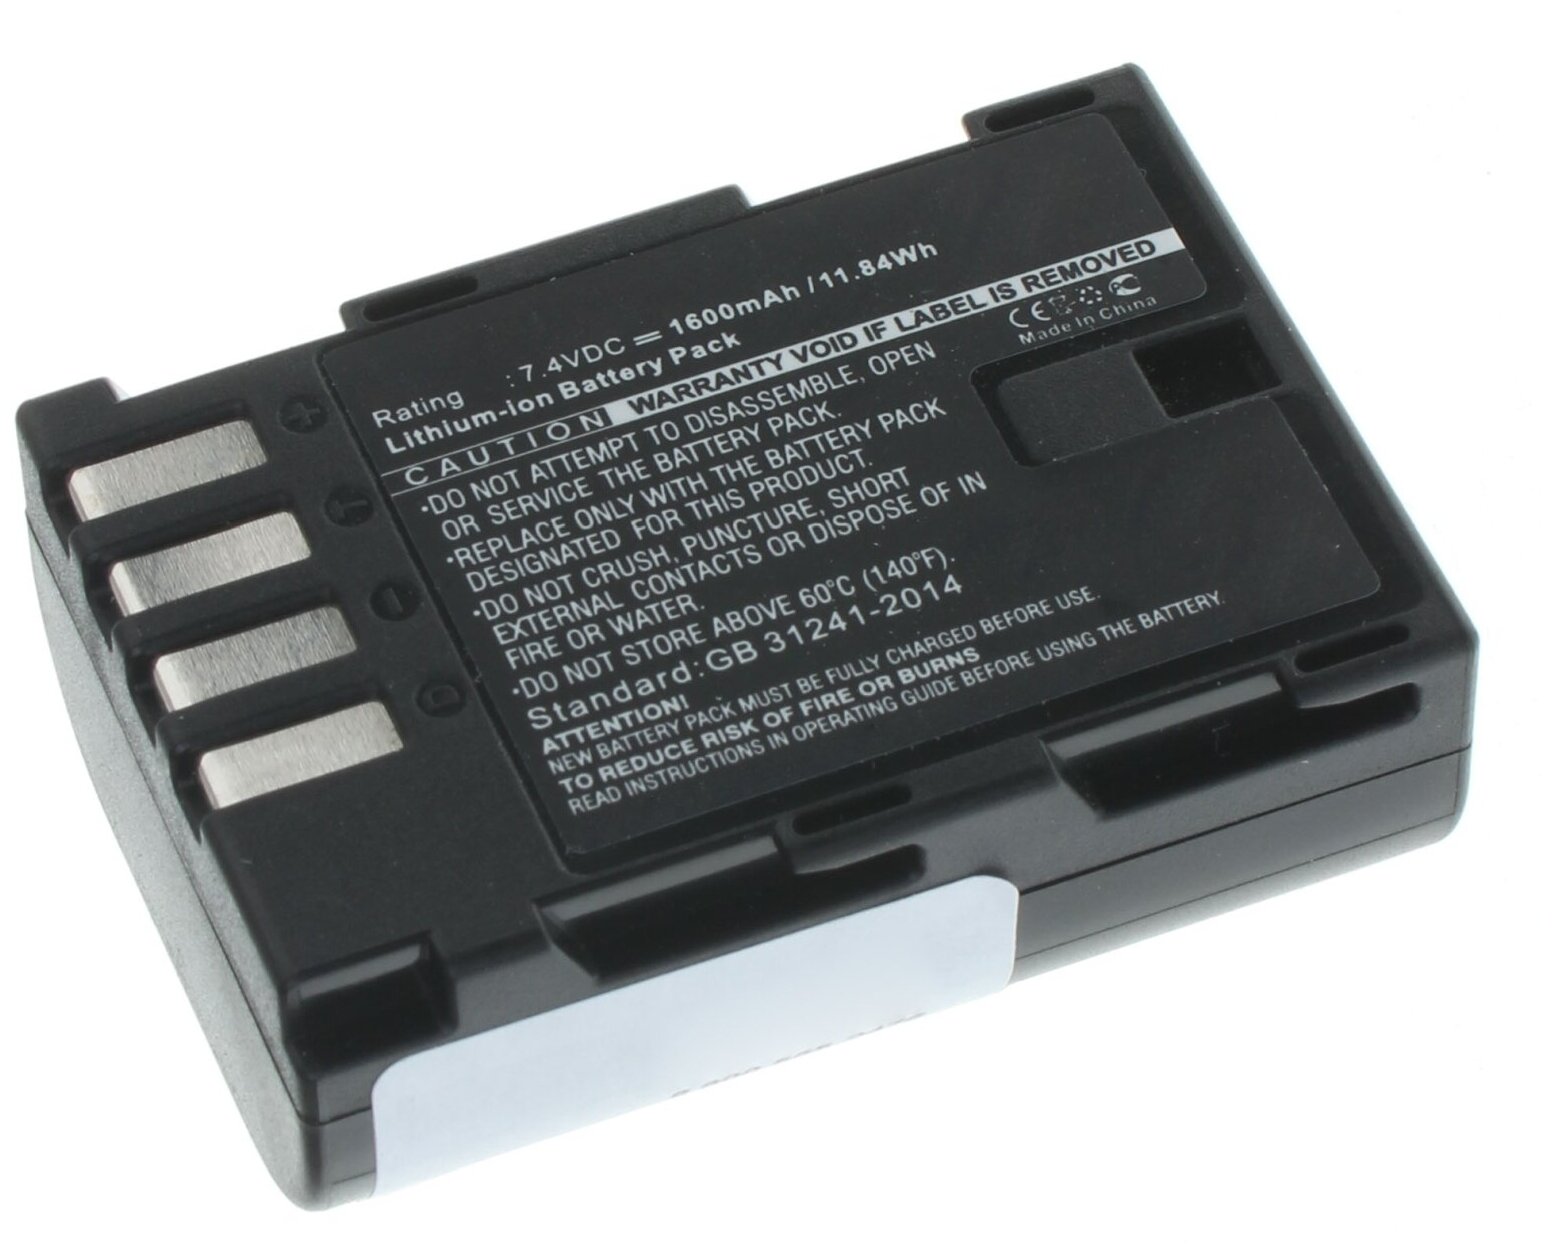 Аккумуляторная батарея iBatt 1600mAh для Panasonic Lumix DMC-GH4, Lumix DMC-GH3